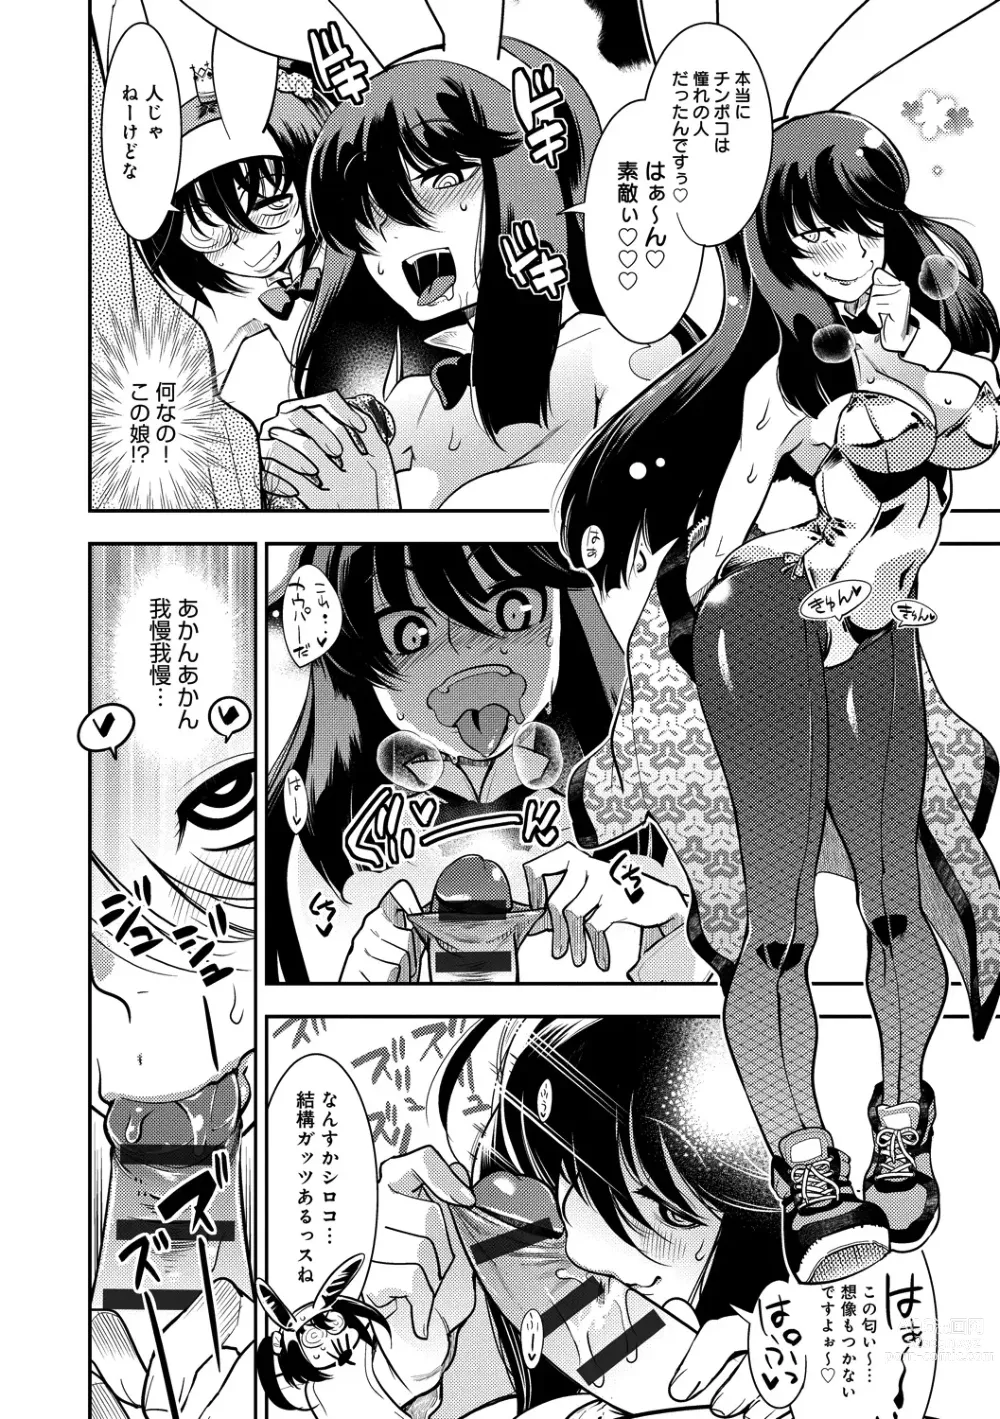 Page 212 of manga Hamekko 3Peace!!!